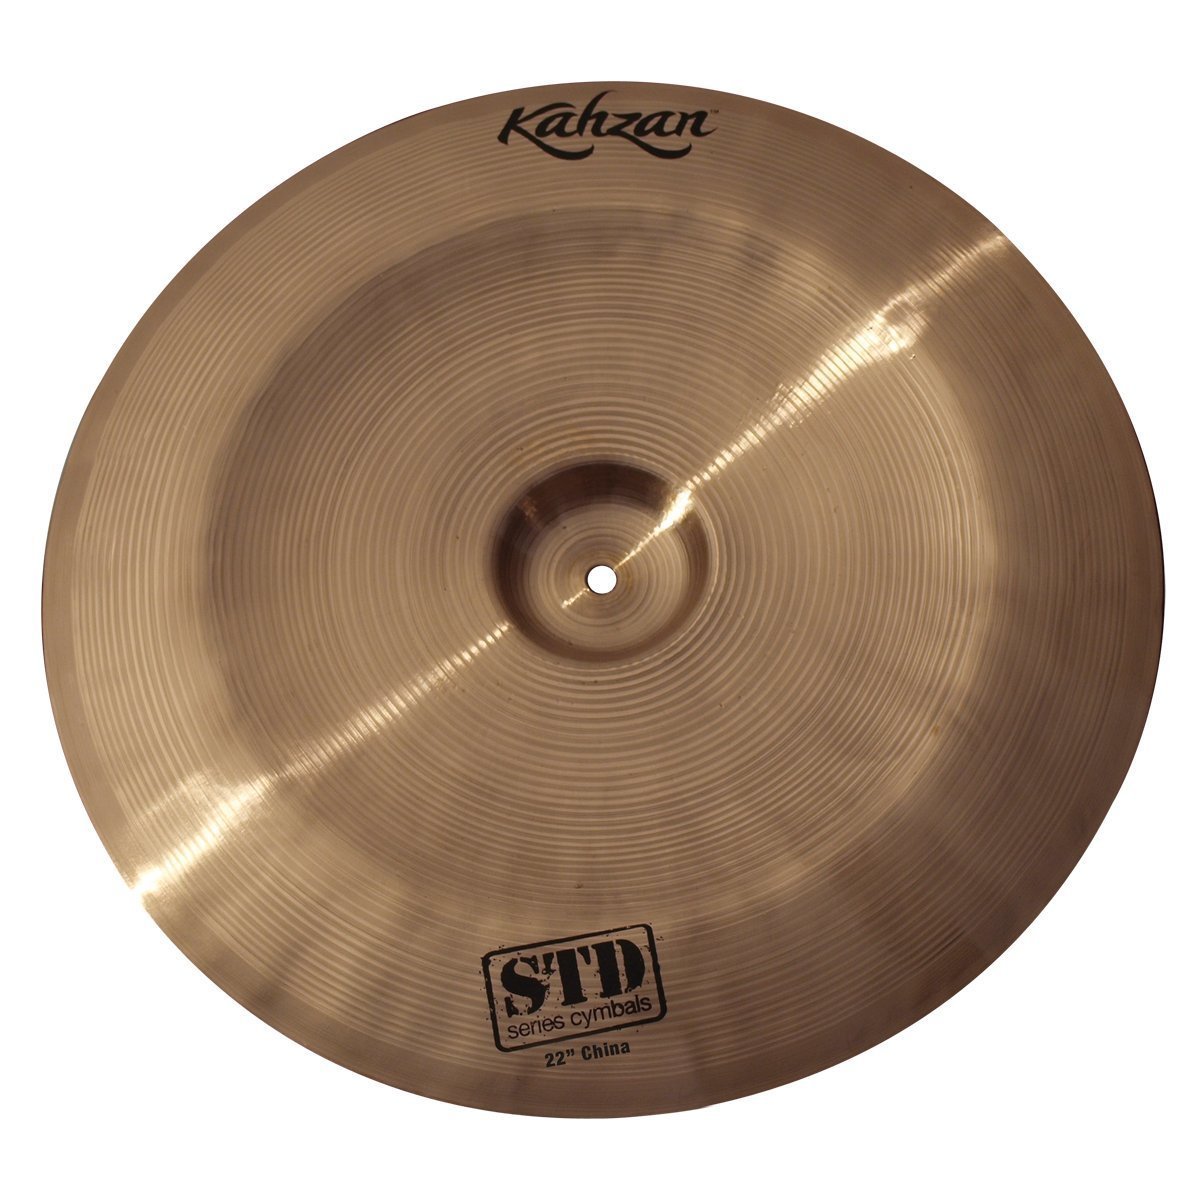 Kahzan 'STD Series' China Cymbal (22")-KC-STD-CH22